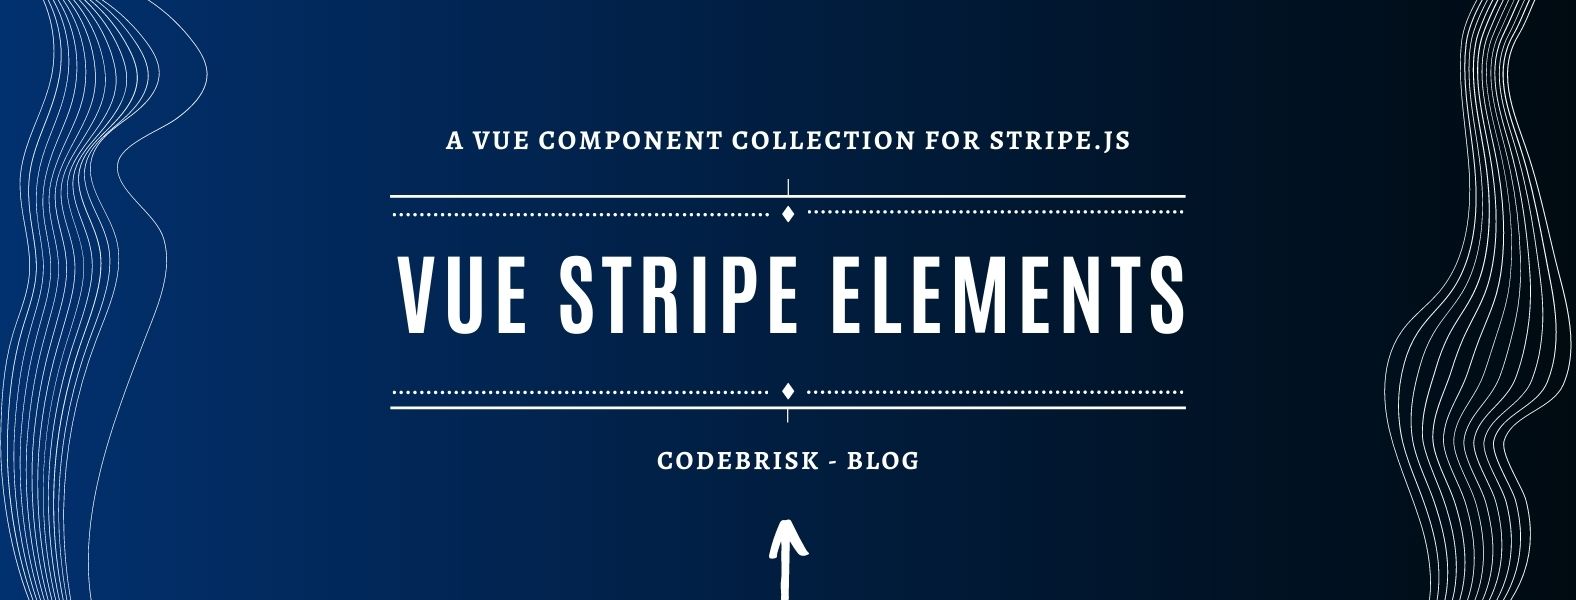 Vue Stripe Elements - Vue component collection for Stripe js cover image